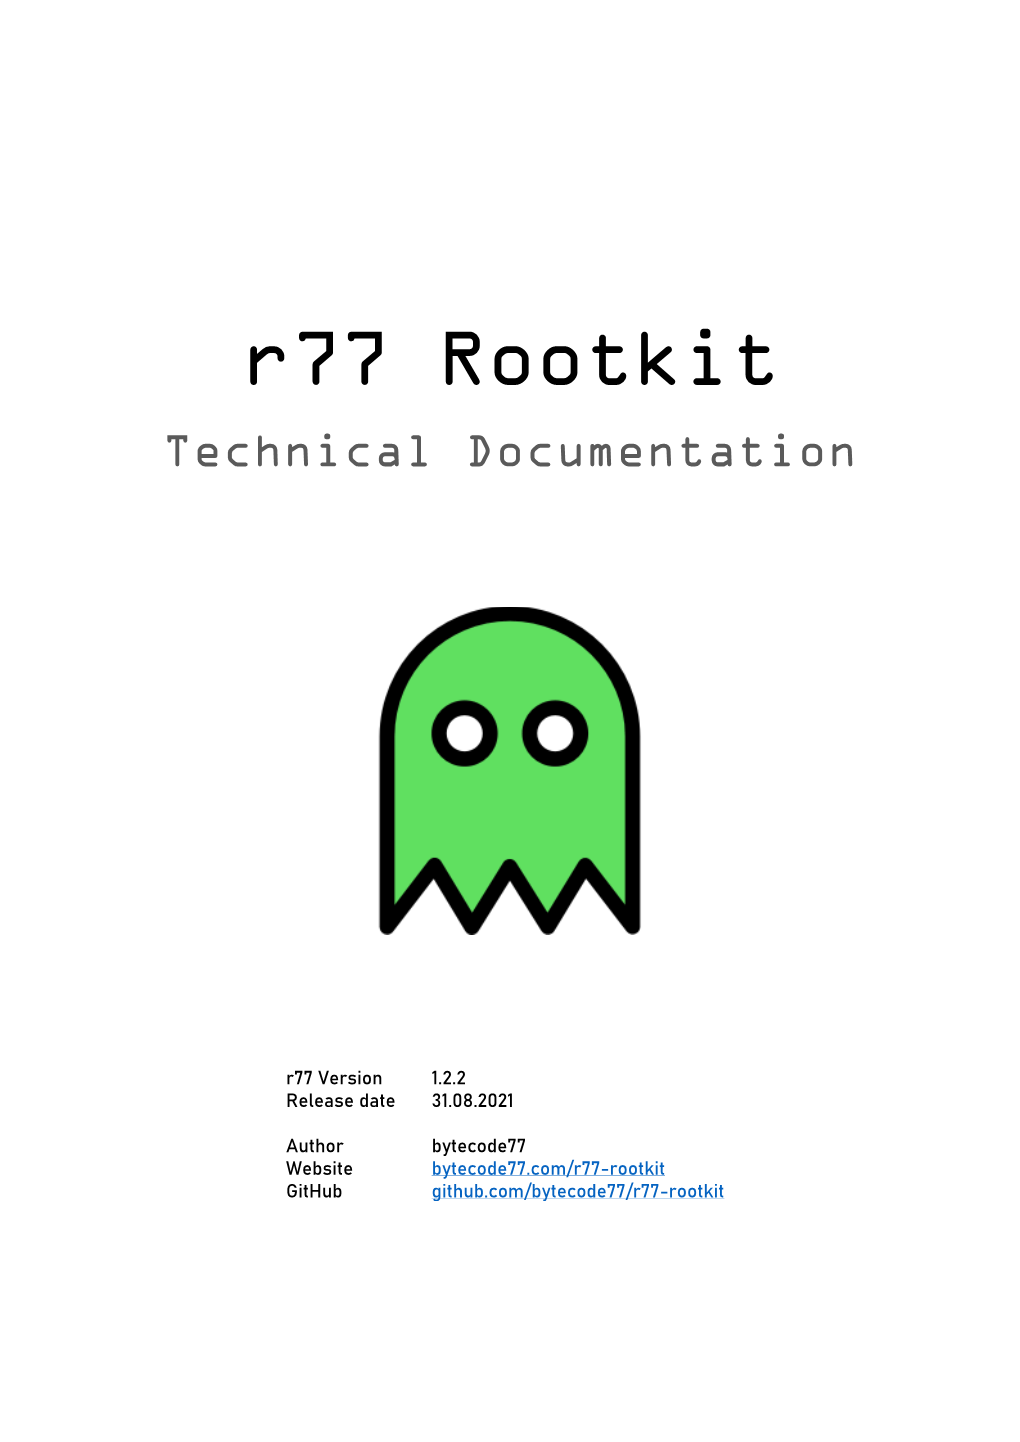 R77 Rootkit Technical Documentation